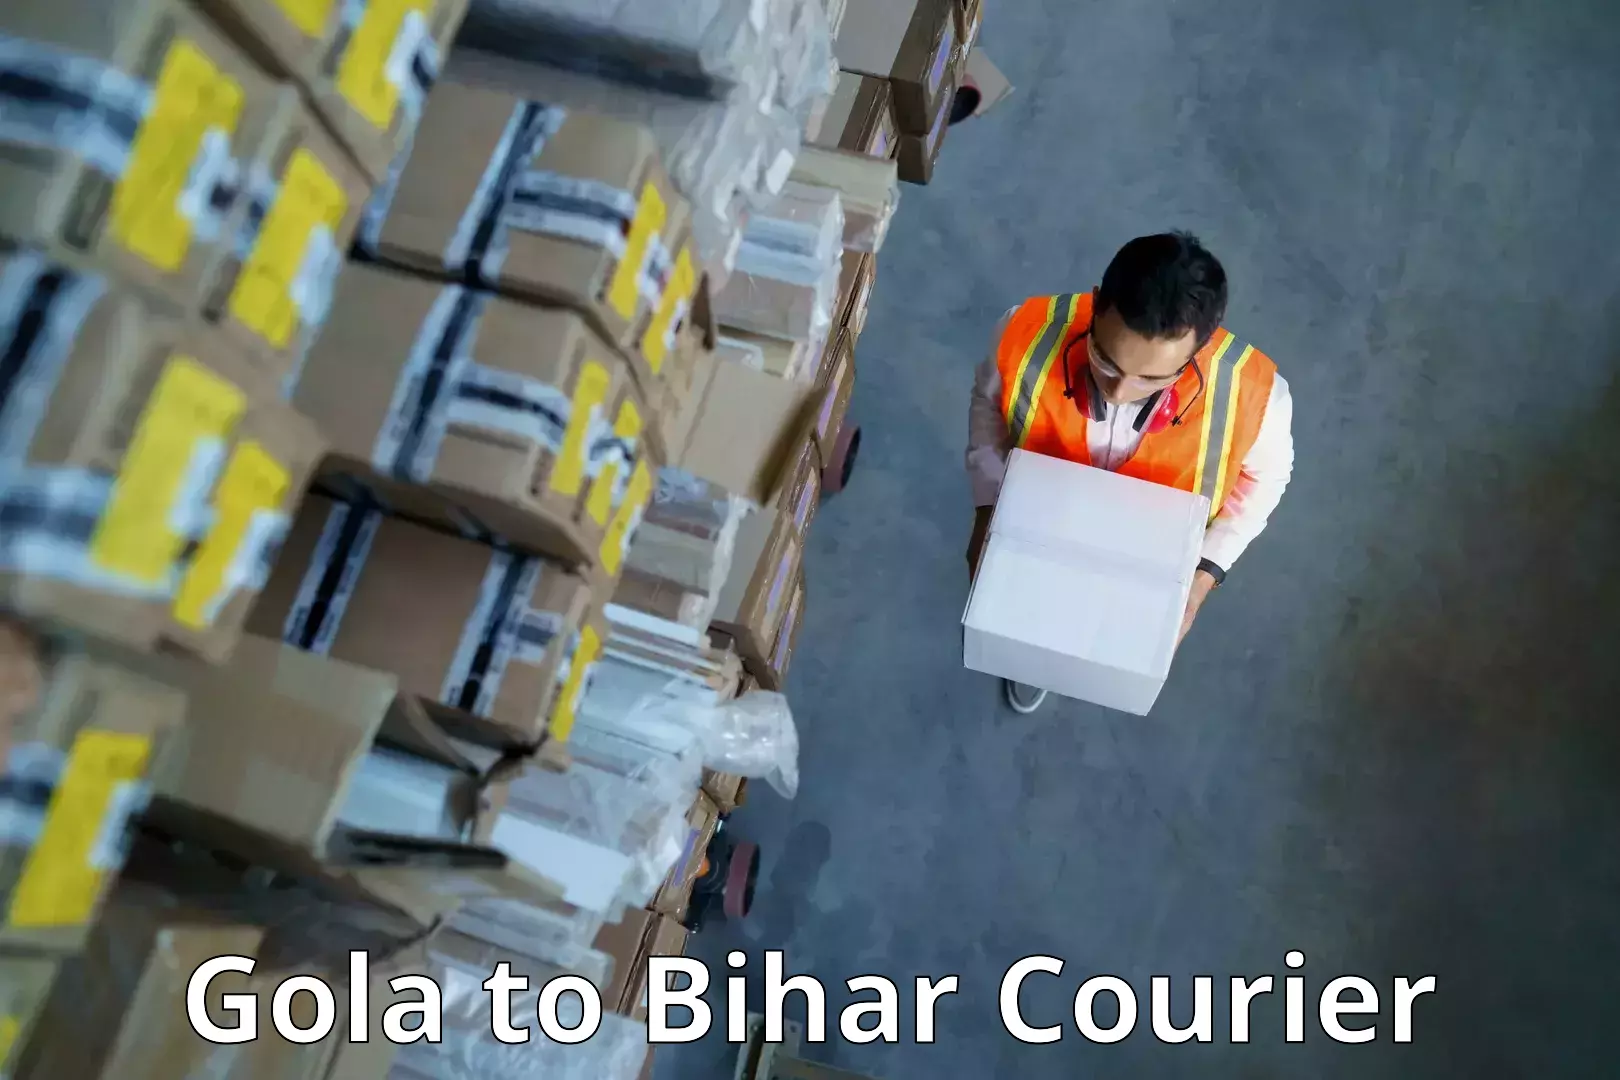 Reliable delivery network Gola to Maranga